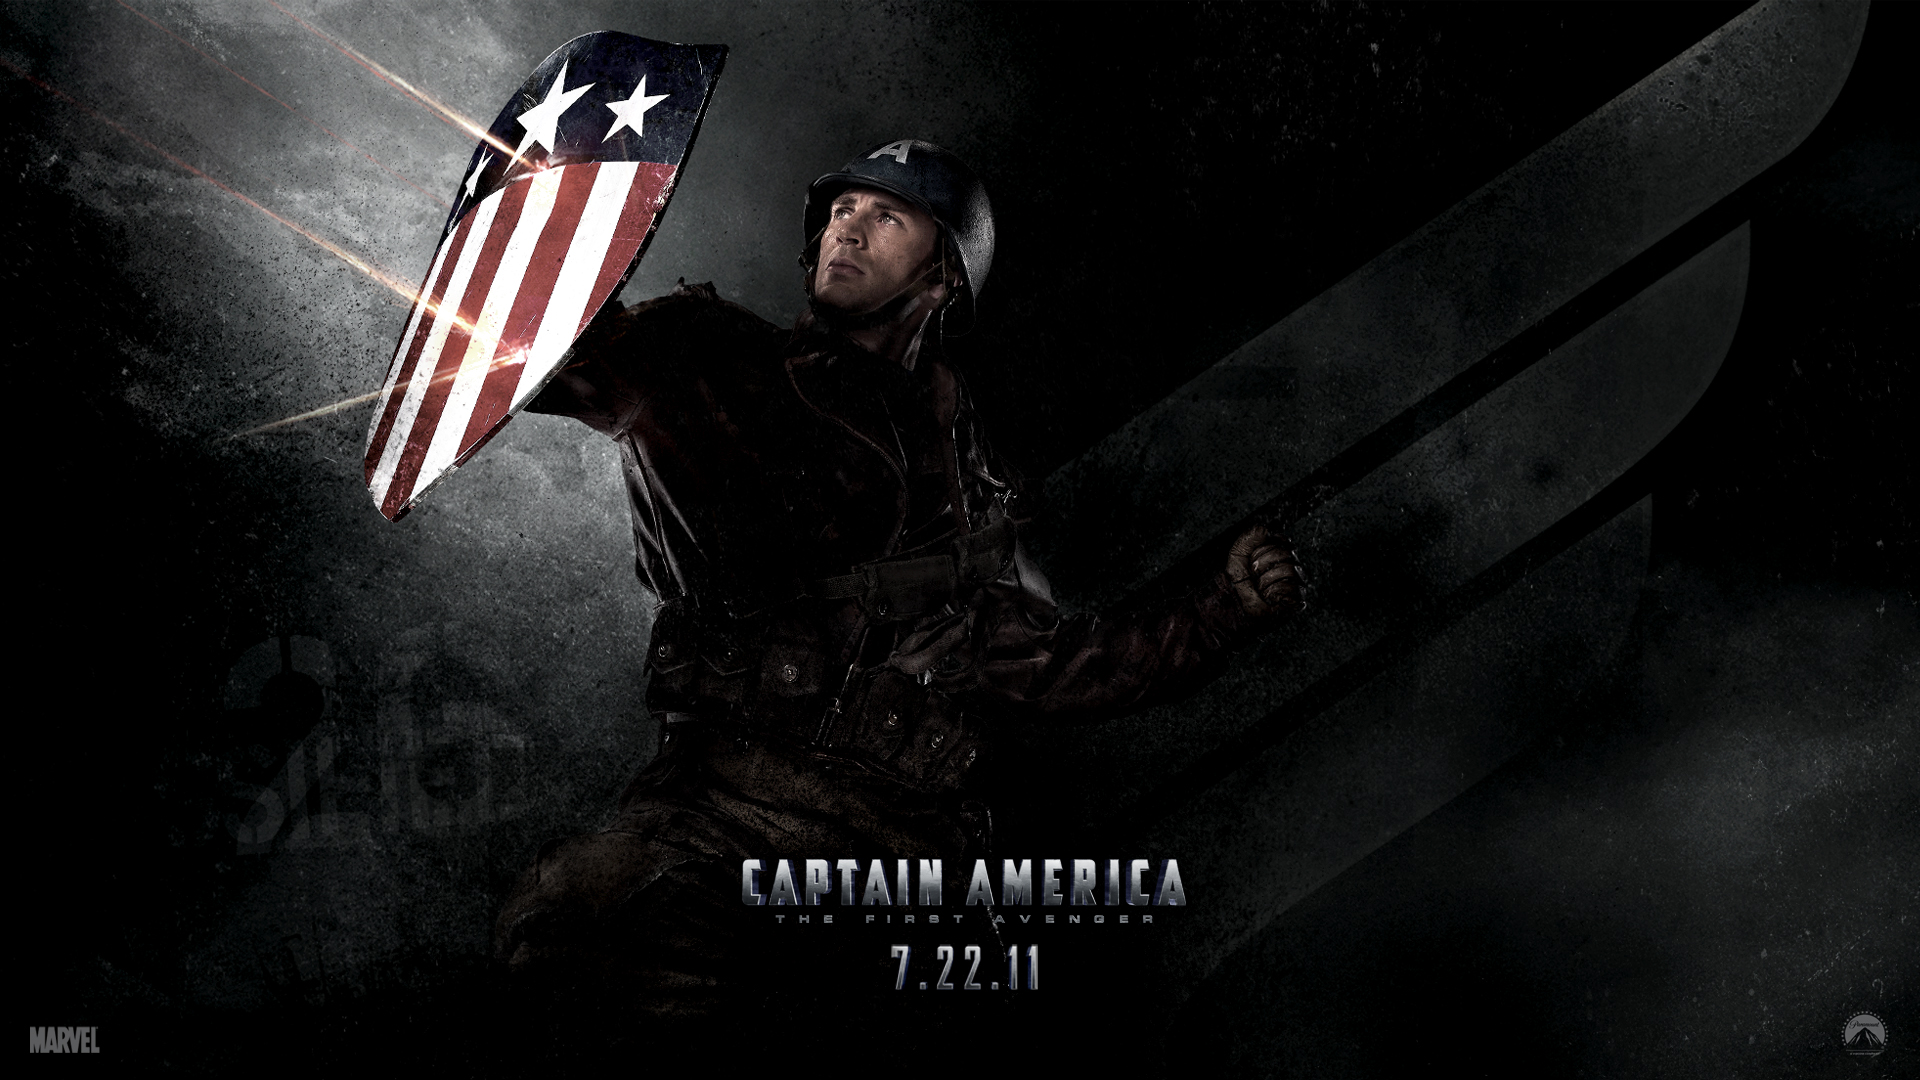 Chris Evans in Captain America 2011 Wallpapers HD Wallpapers